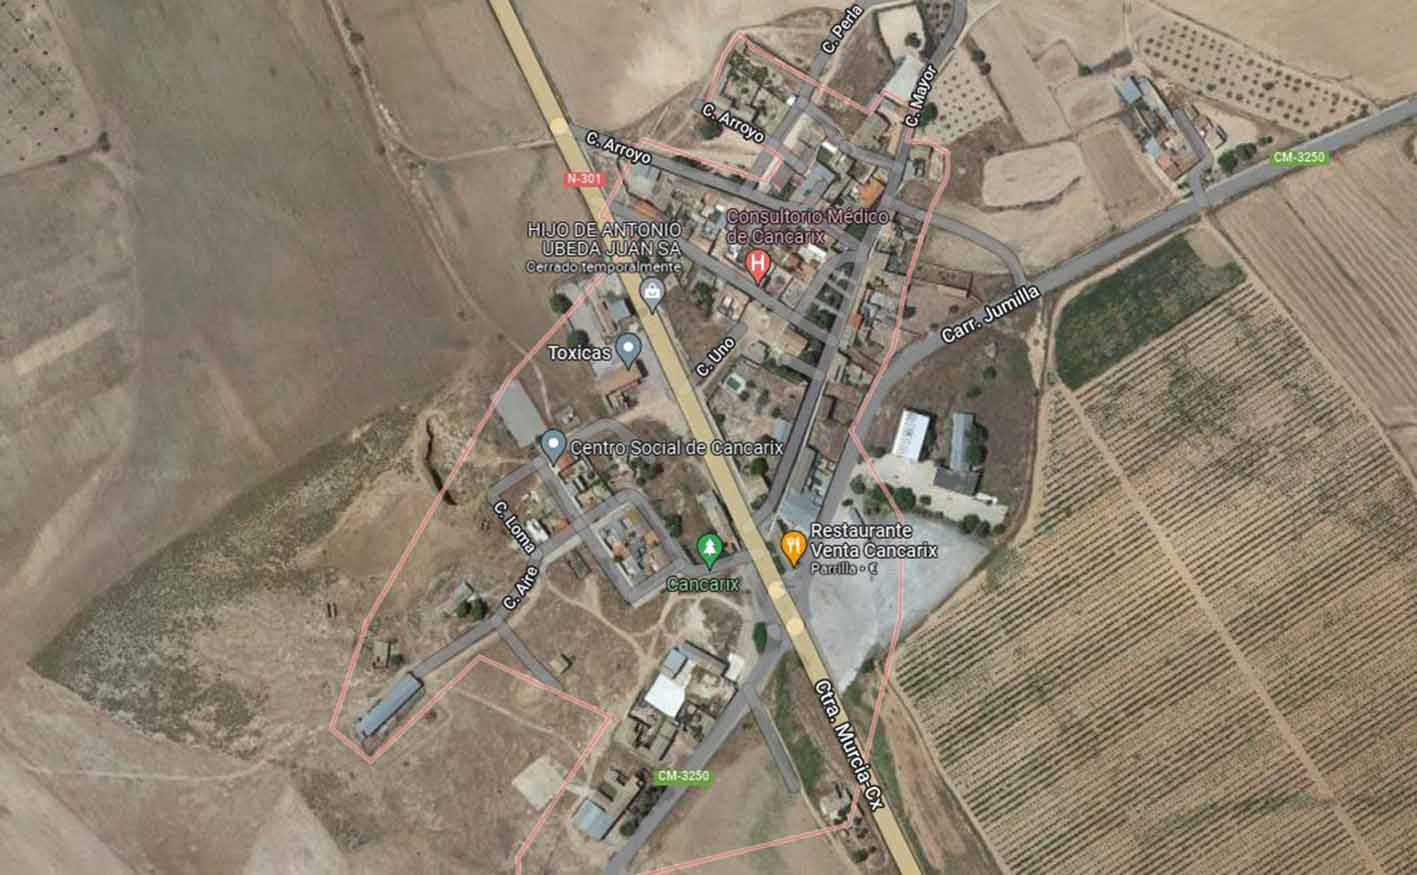 El accidente se produjo en el término municipal de Cancarix. Imagen: Google Maps.